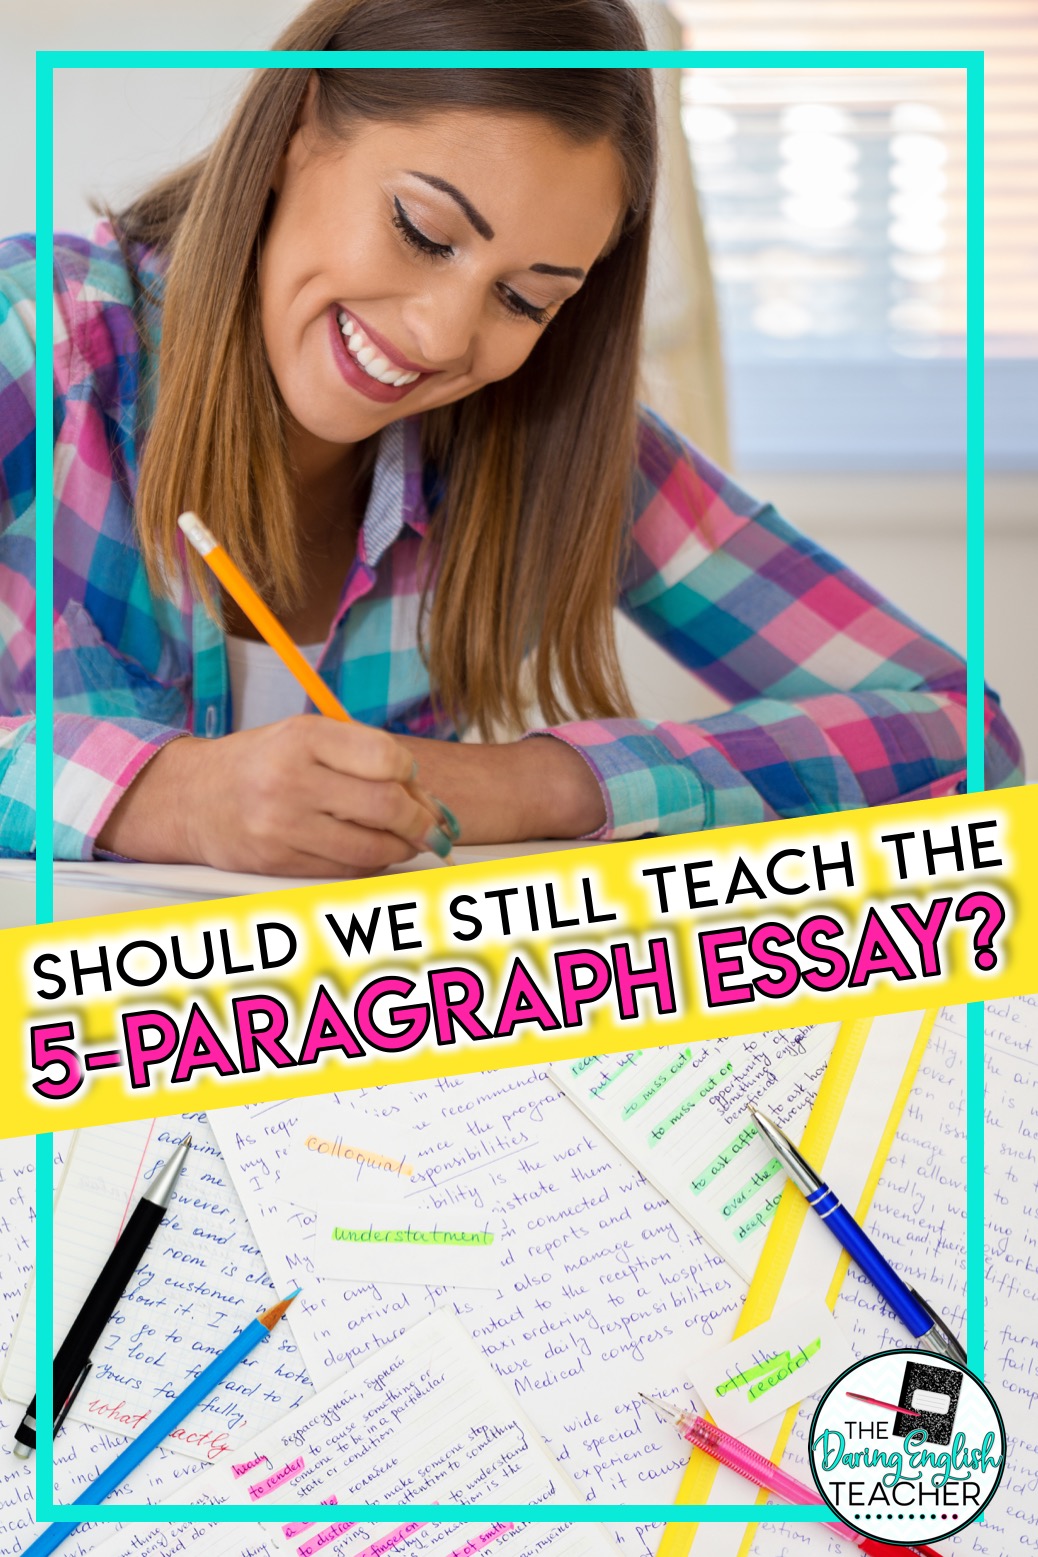 Should we still teach the five-paragraph essay?